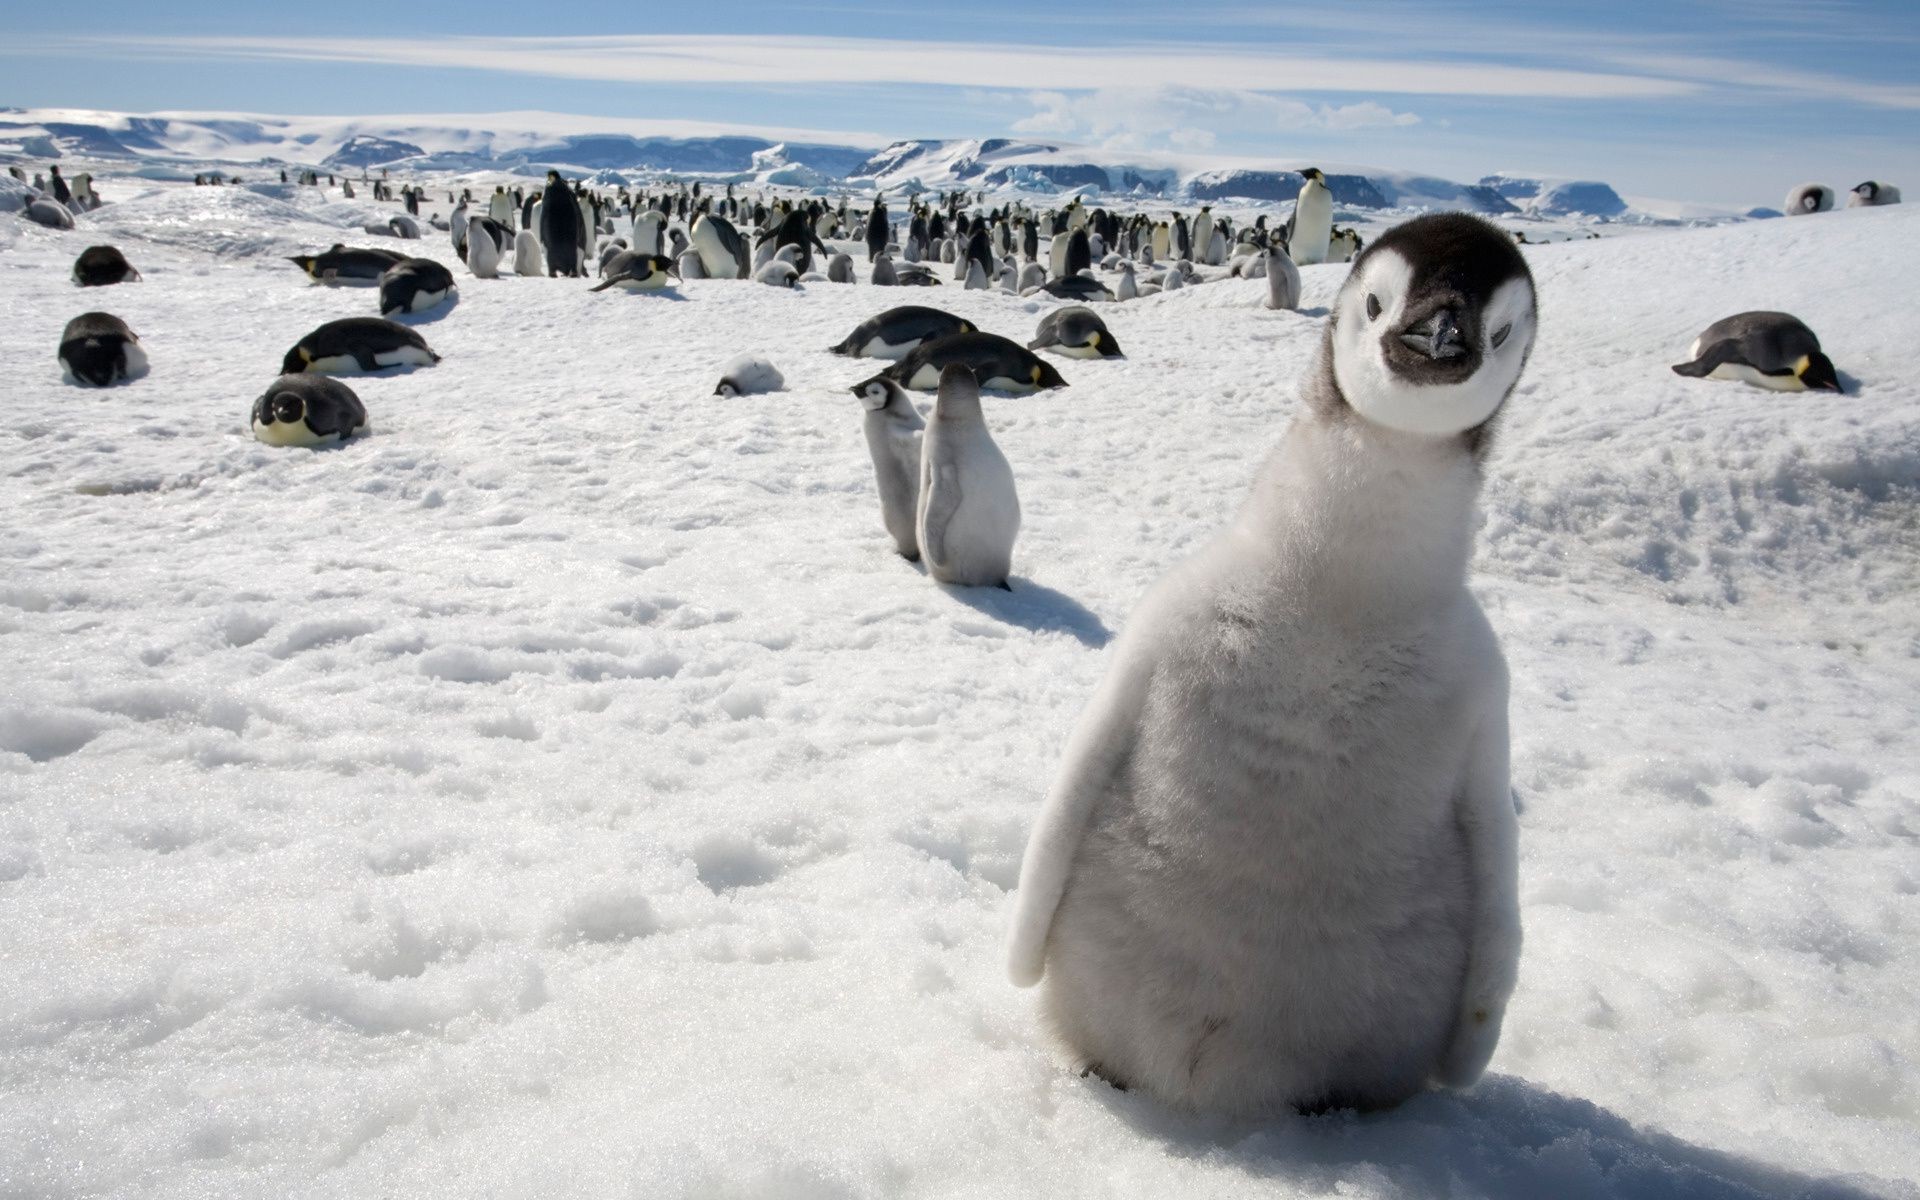 animals snow winter cold frosty ice polar bird ocean antarctic wildlife frozen nature sea penguins animal outdoors mammal water frost